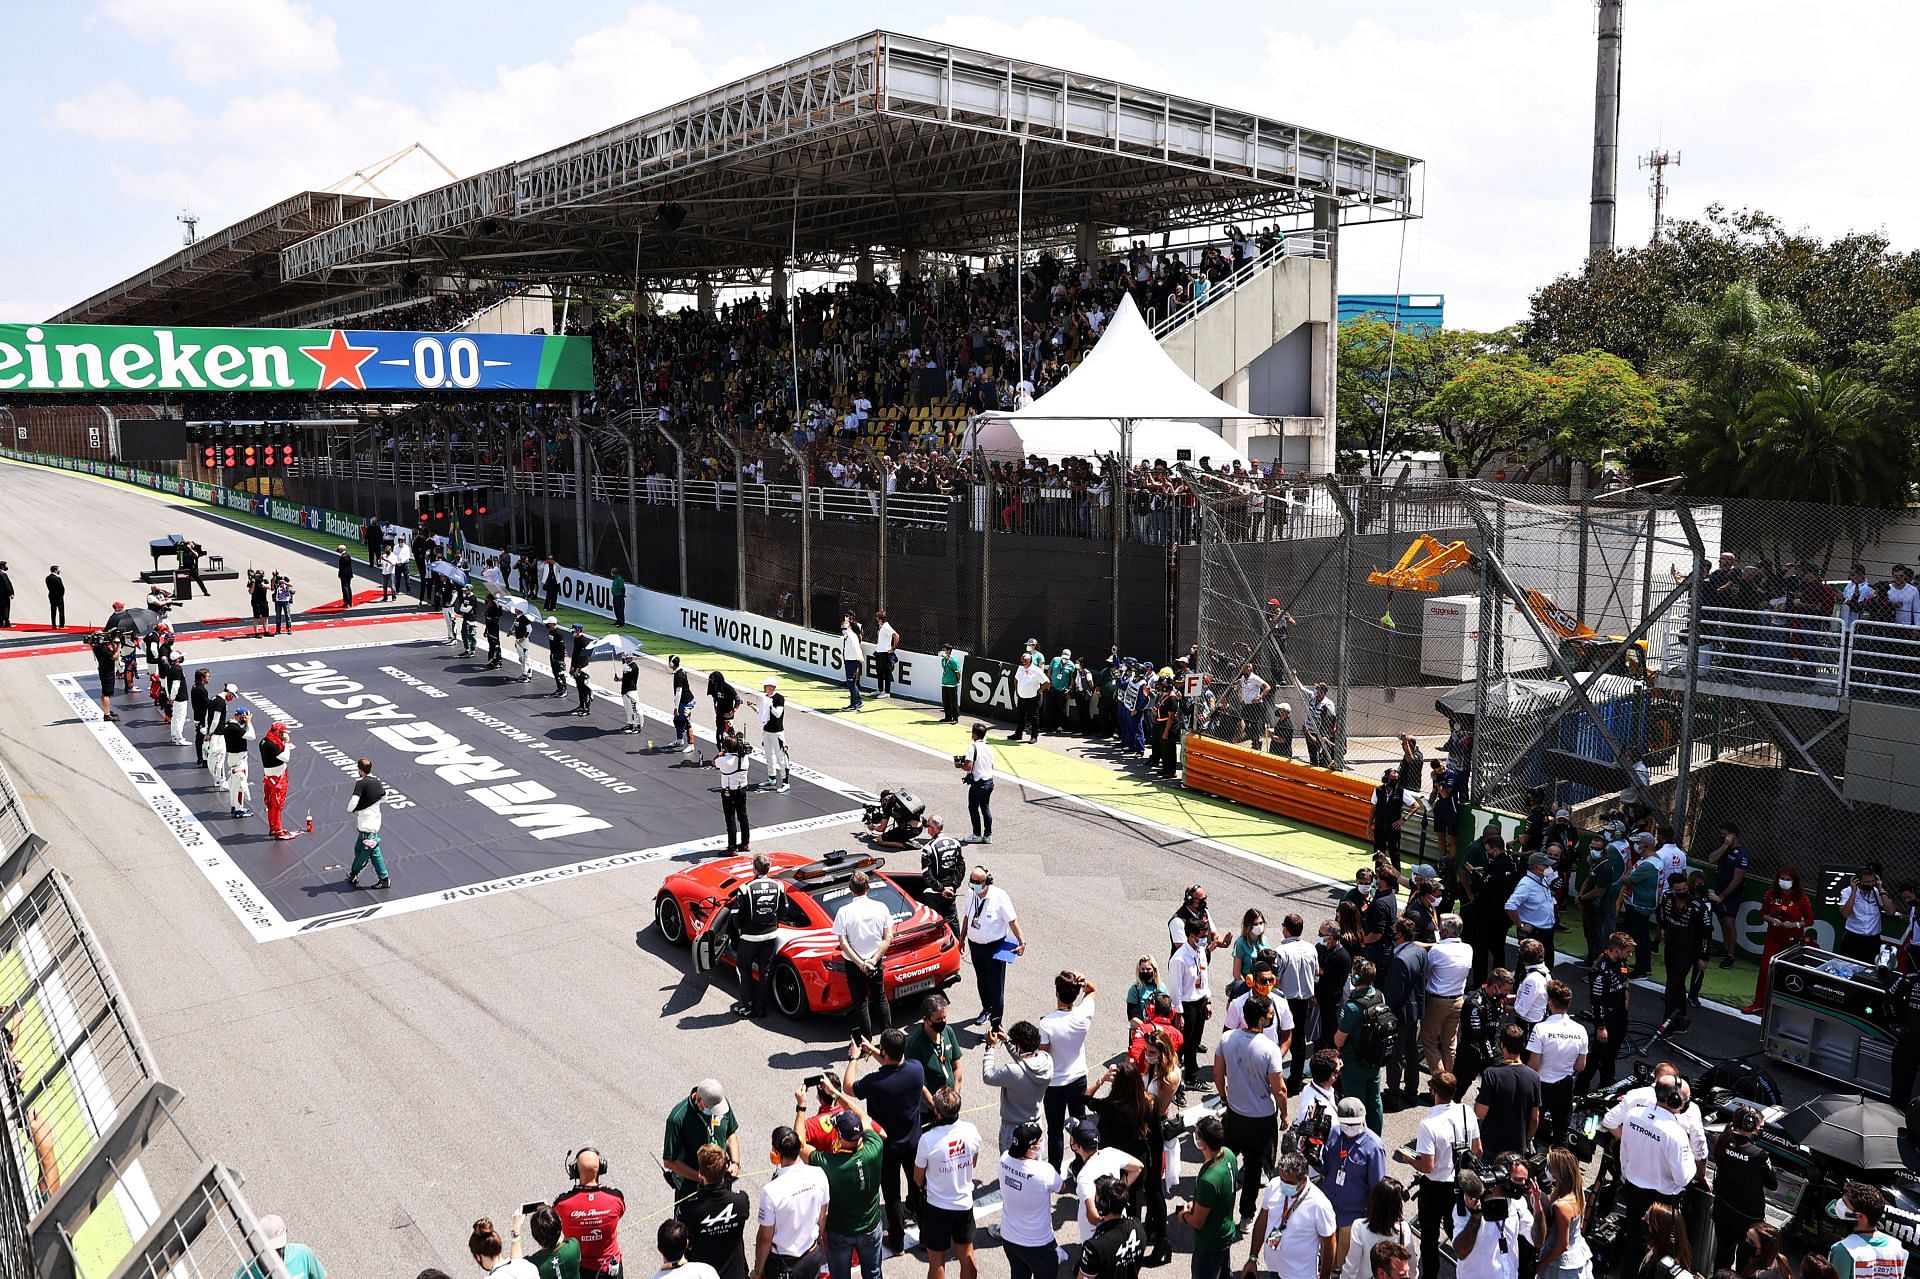 F1 Grand Prix of Brazil